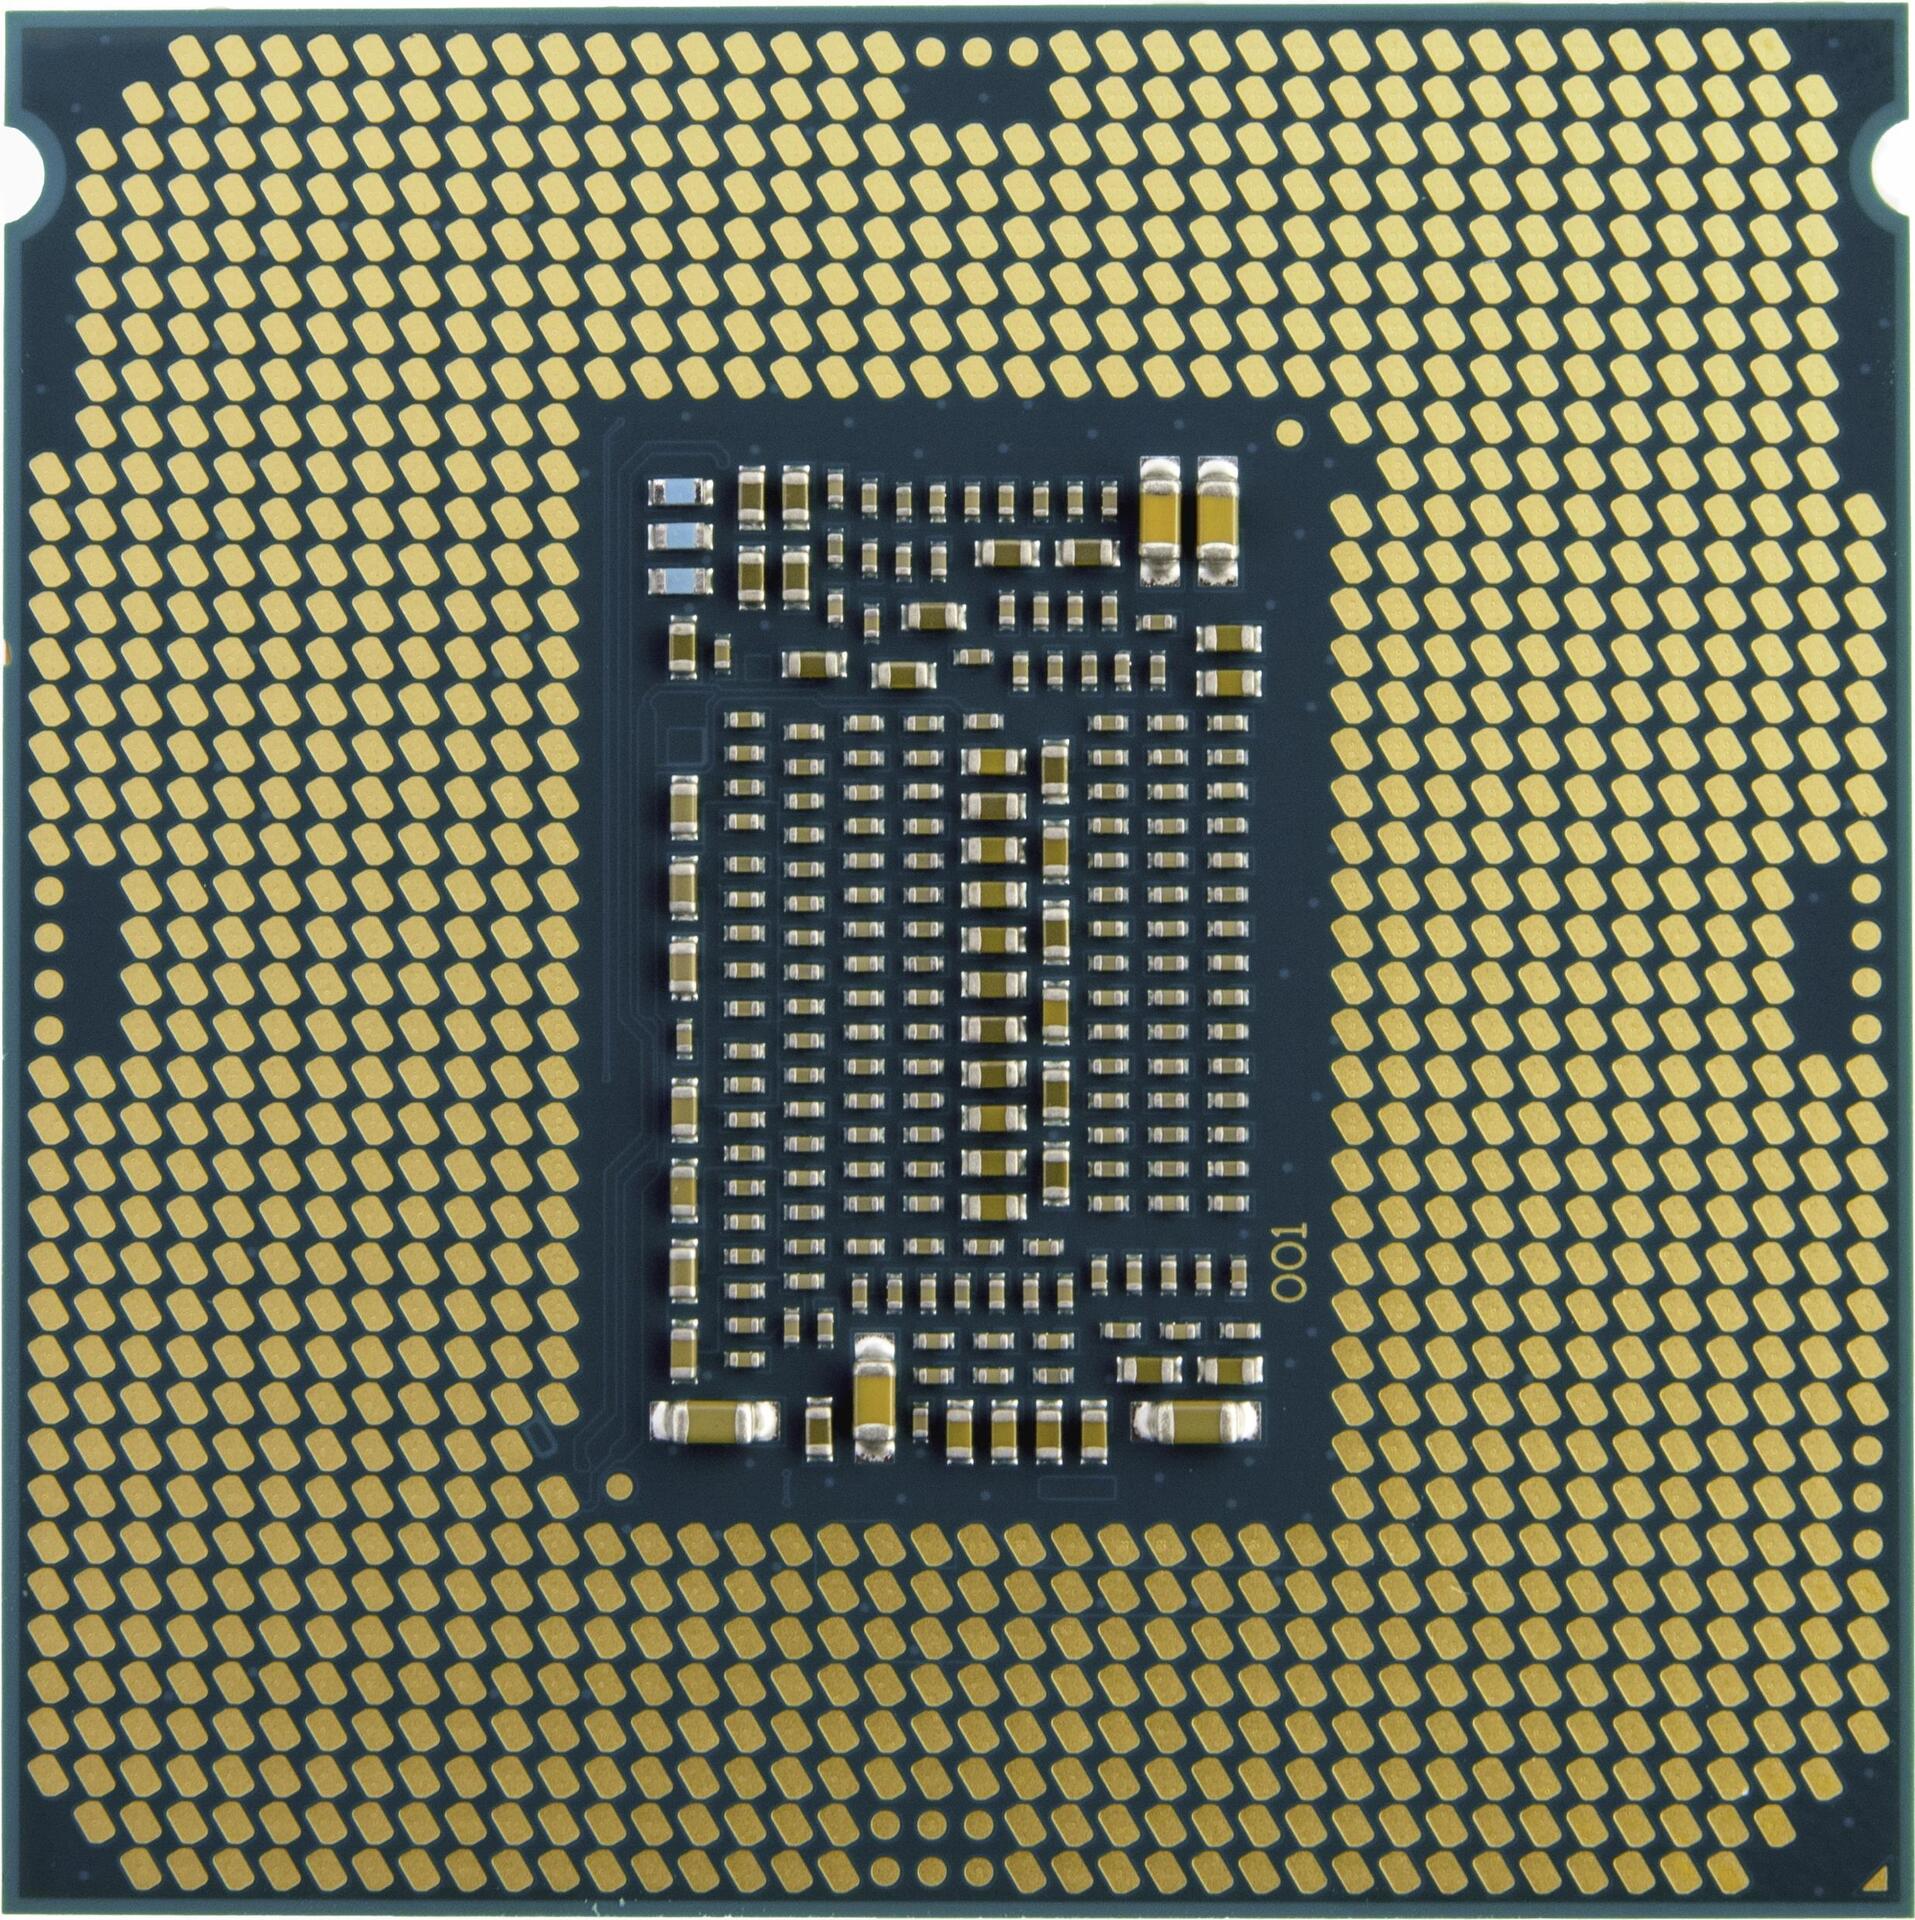 INTEL CPU/Xeon E-2246G 3.60GHz LGA1151 Tray